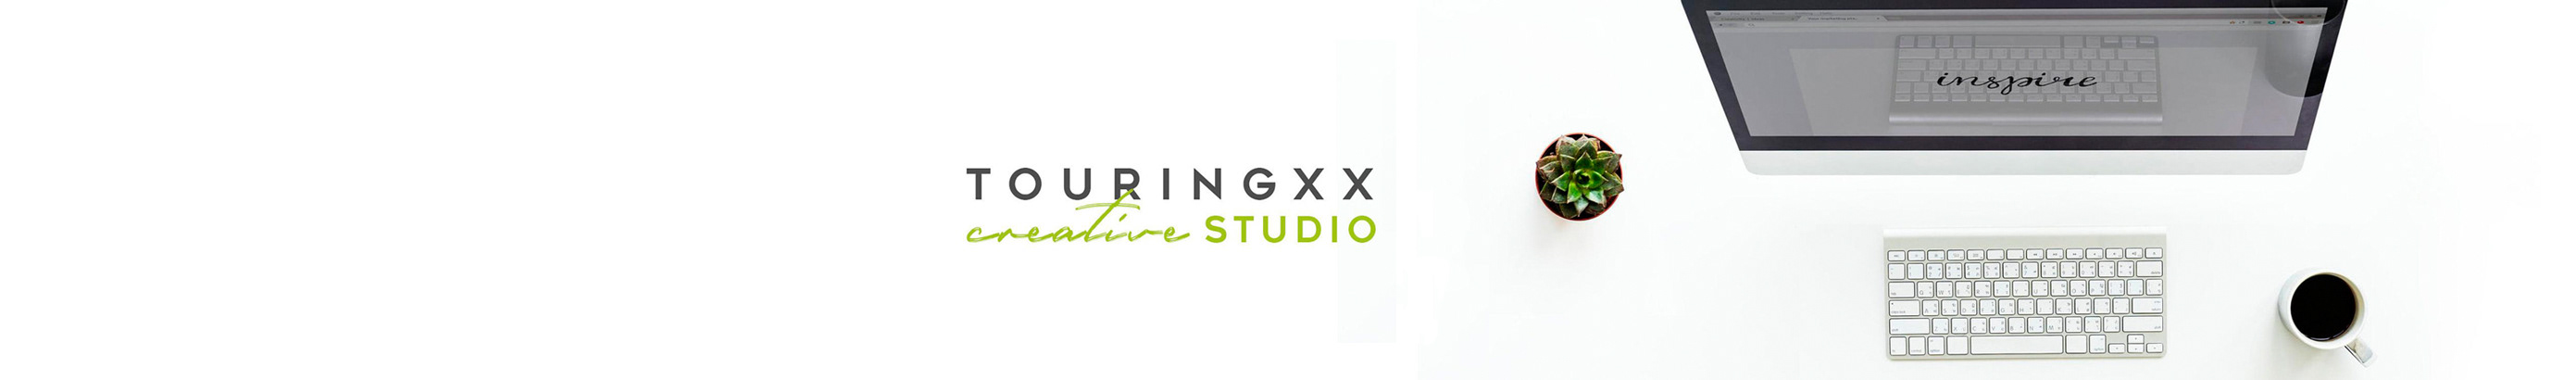 Banner profilu uživatele Touringxx Creative Studio